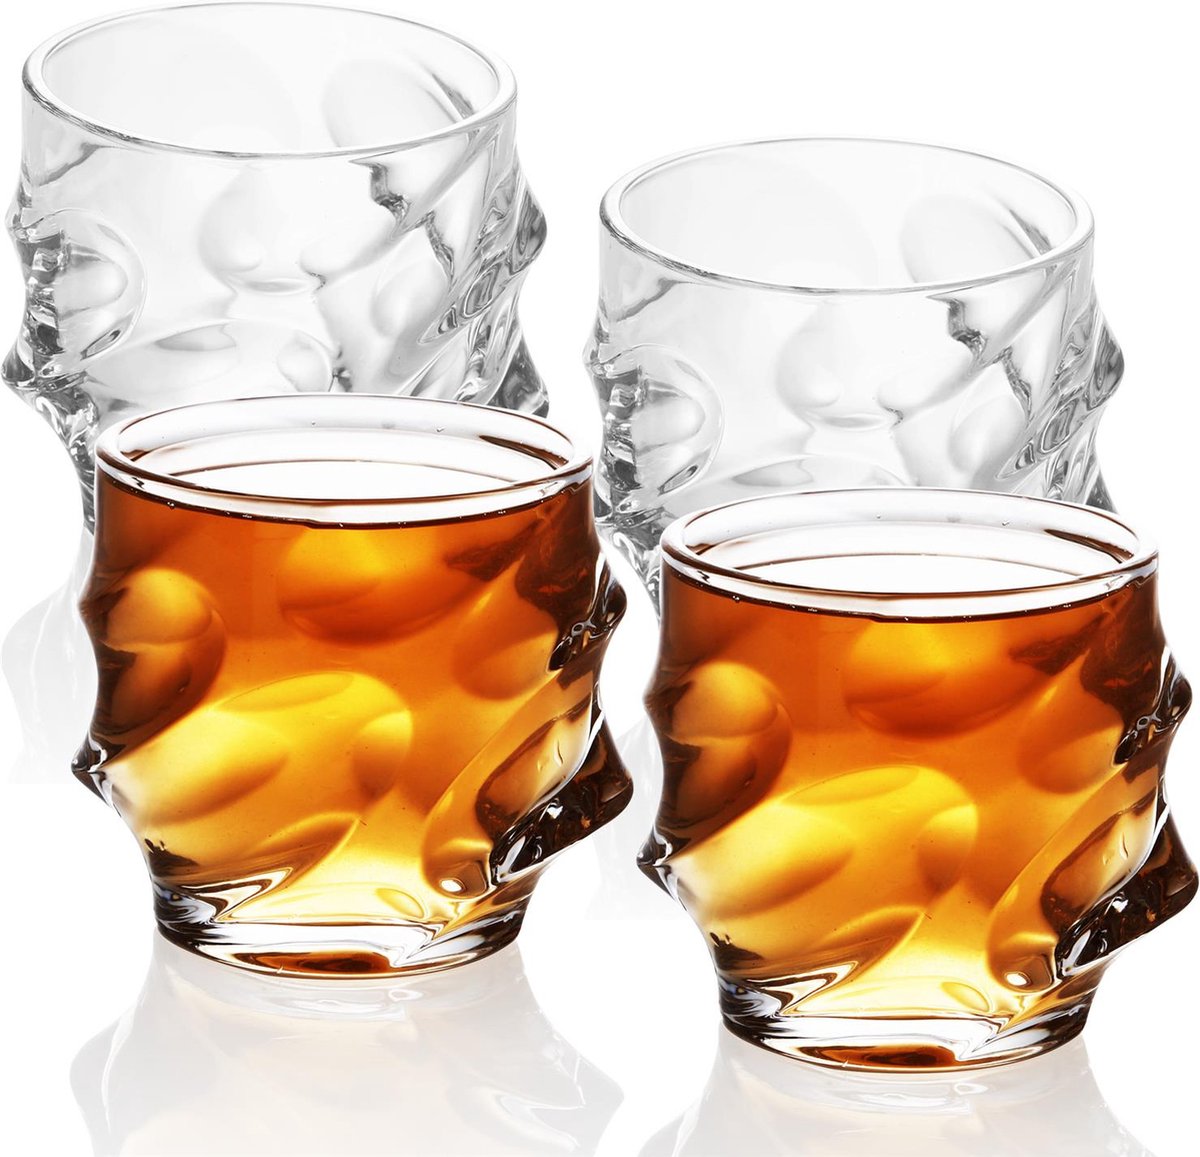 Intirilife 4x whiskyglas in CRYSTAL CLEAR 'SCULPTURED' - Old Fashioned Whiskey Crystal Glass Loodvrij in Sculpture Design vaatwasserbestendig perfect voor scotch, bourbon, whisky en nog veel meer.